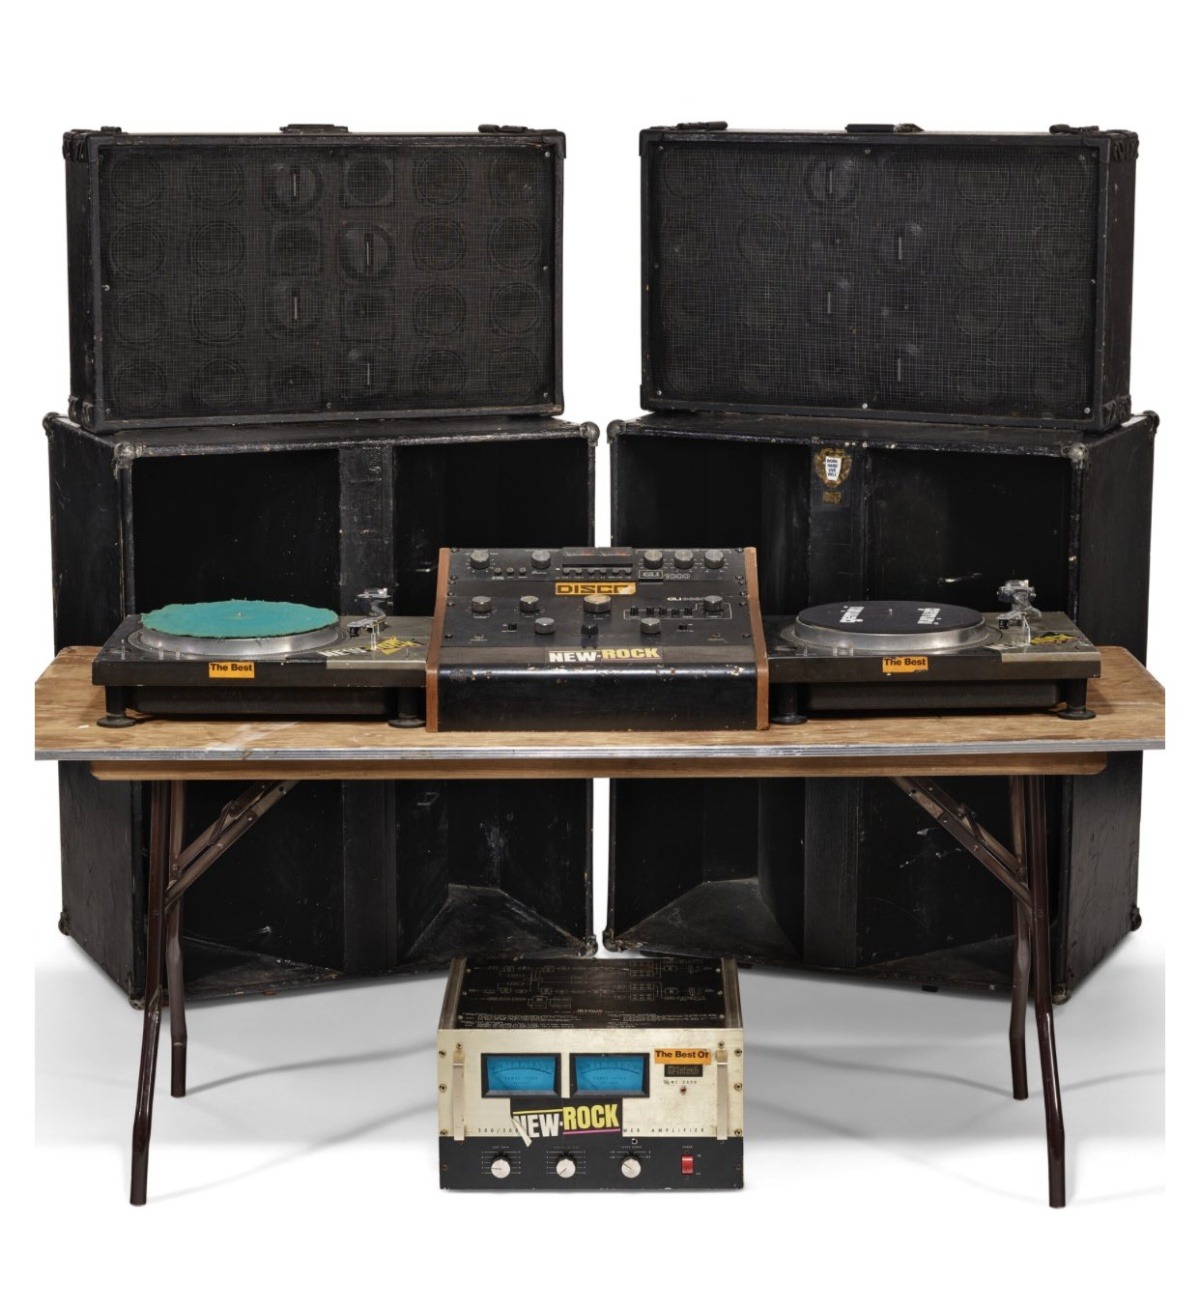 DJ Kool Herc soundsystem sells for over $200k at Christie's auction